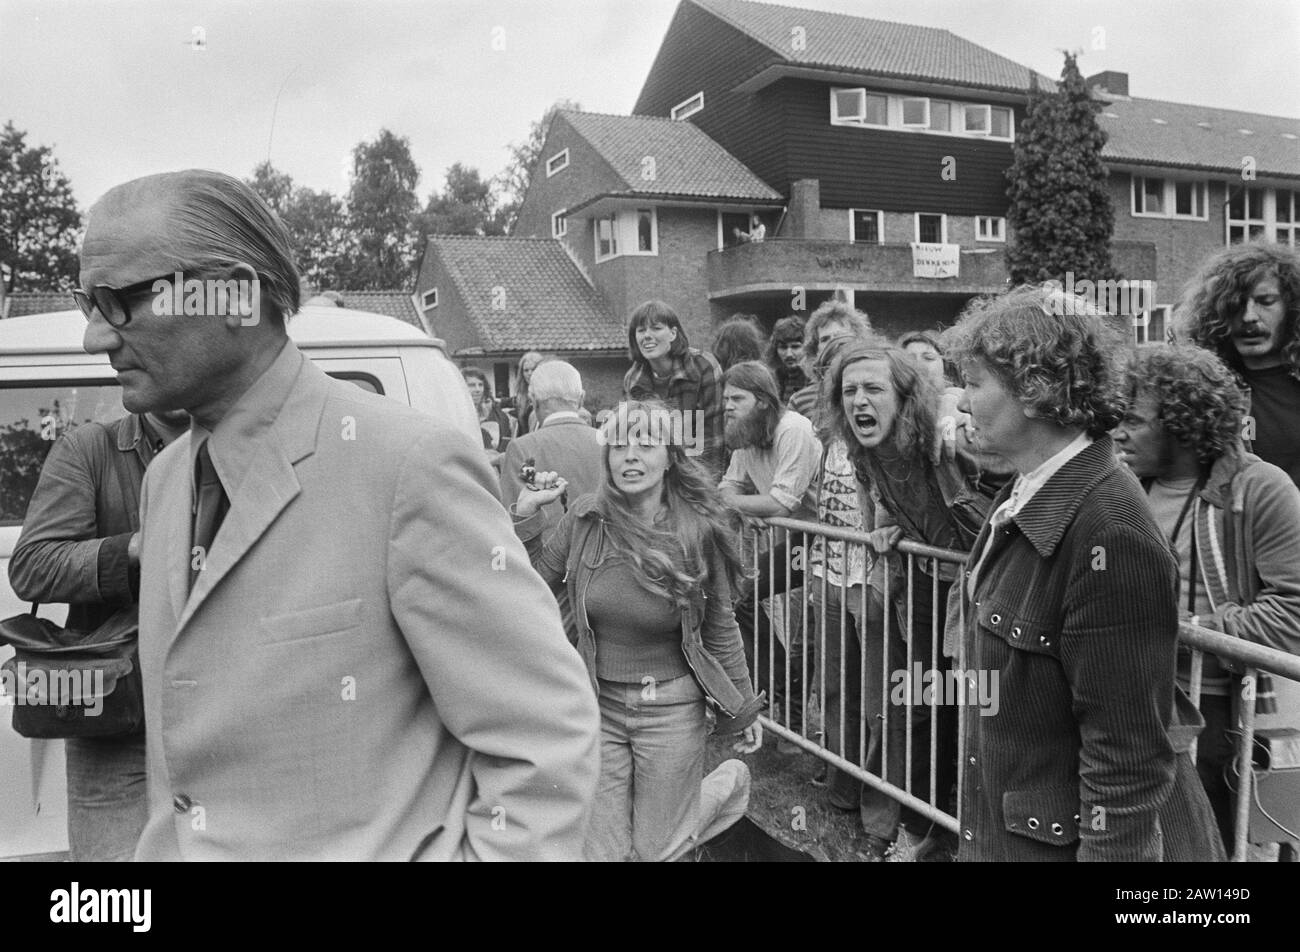 Clearance Lorentz pavilion Dennendal; Mr. Drechsel is booed Date: July 3, 1974 Person Name: Dennendal, LORENTZ Stock Photo